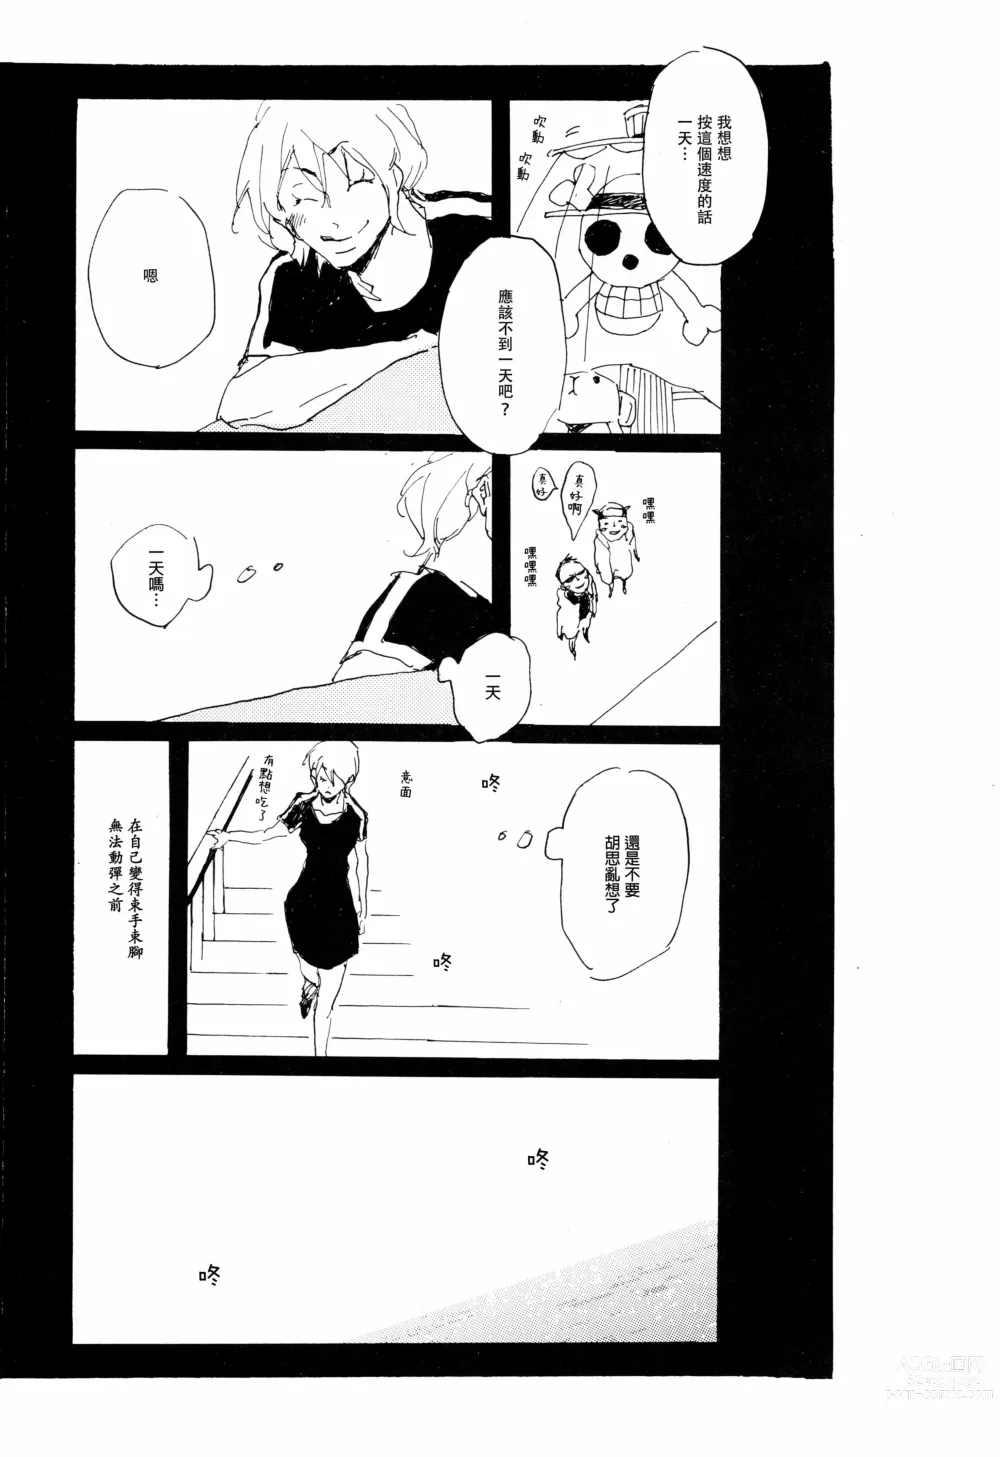 Page 11 of doujinshi 忧郁·与那份没有尽头的悲伤